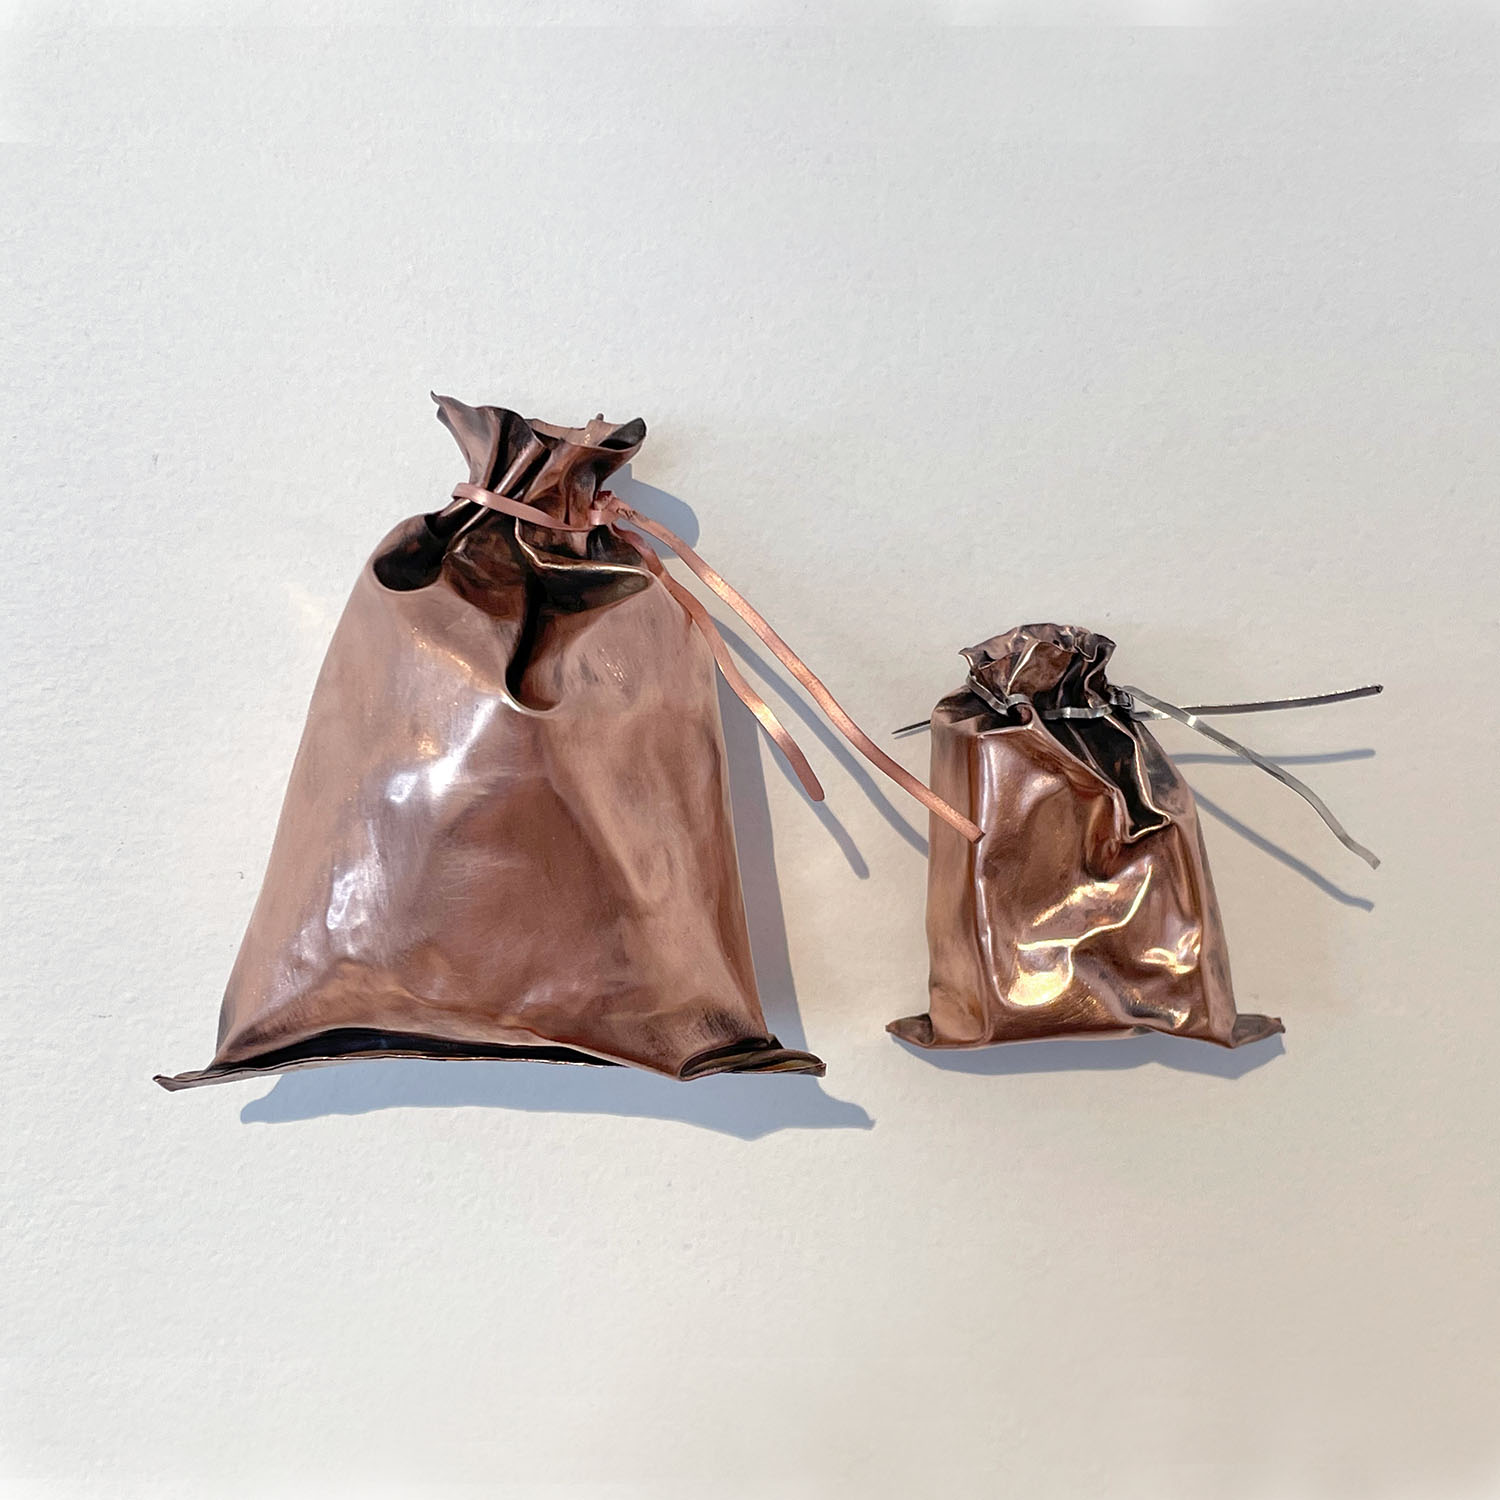 sandbag B cluster by Natalie Macellaio